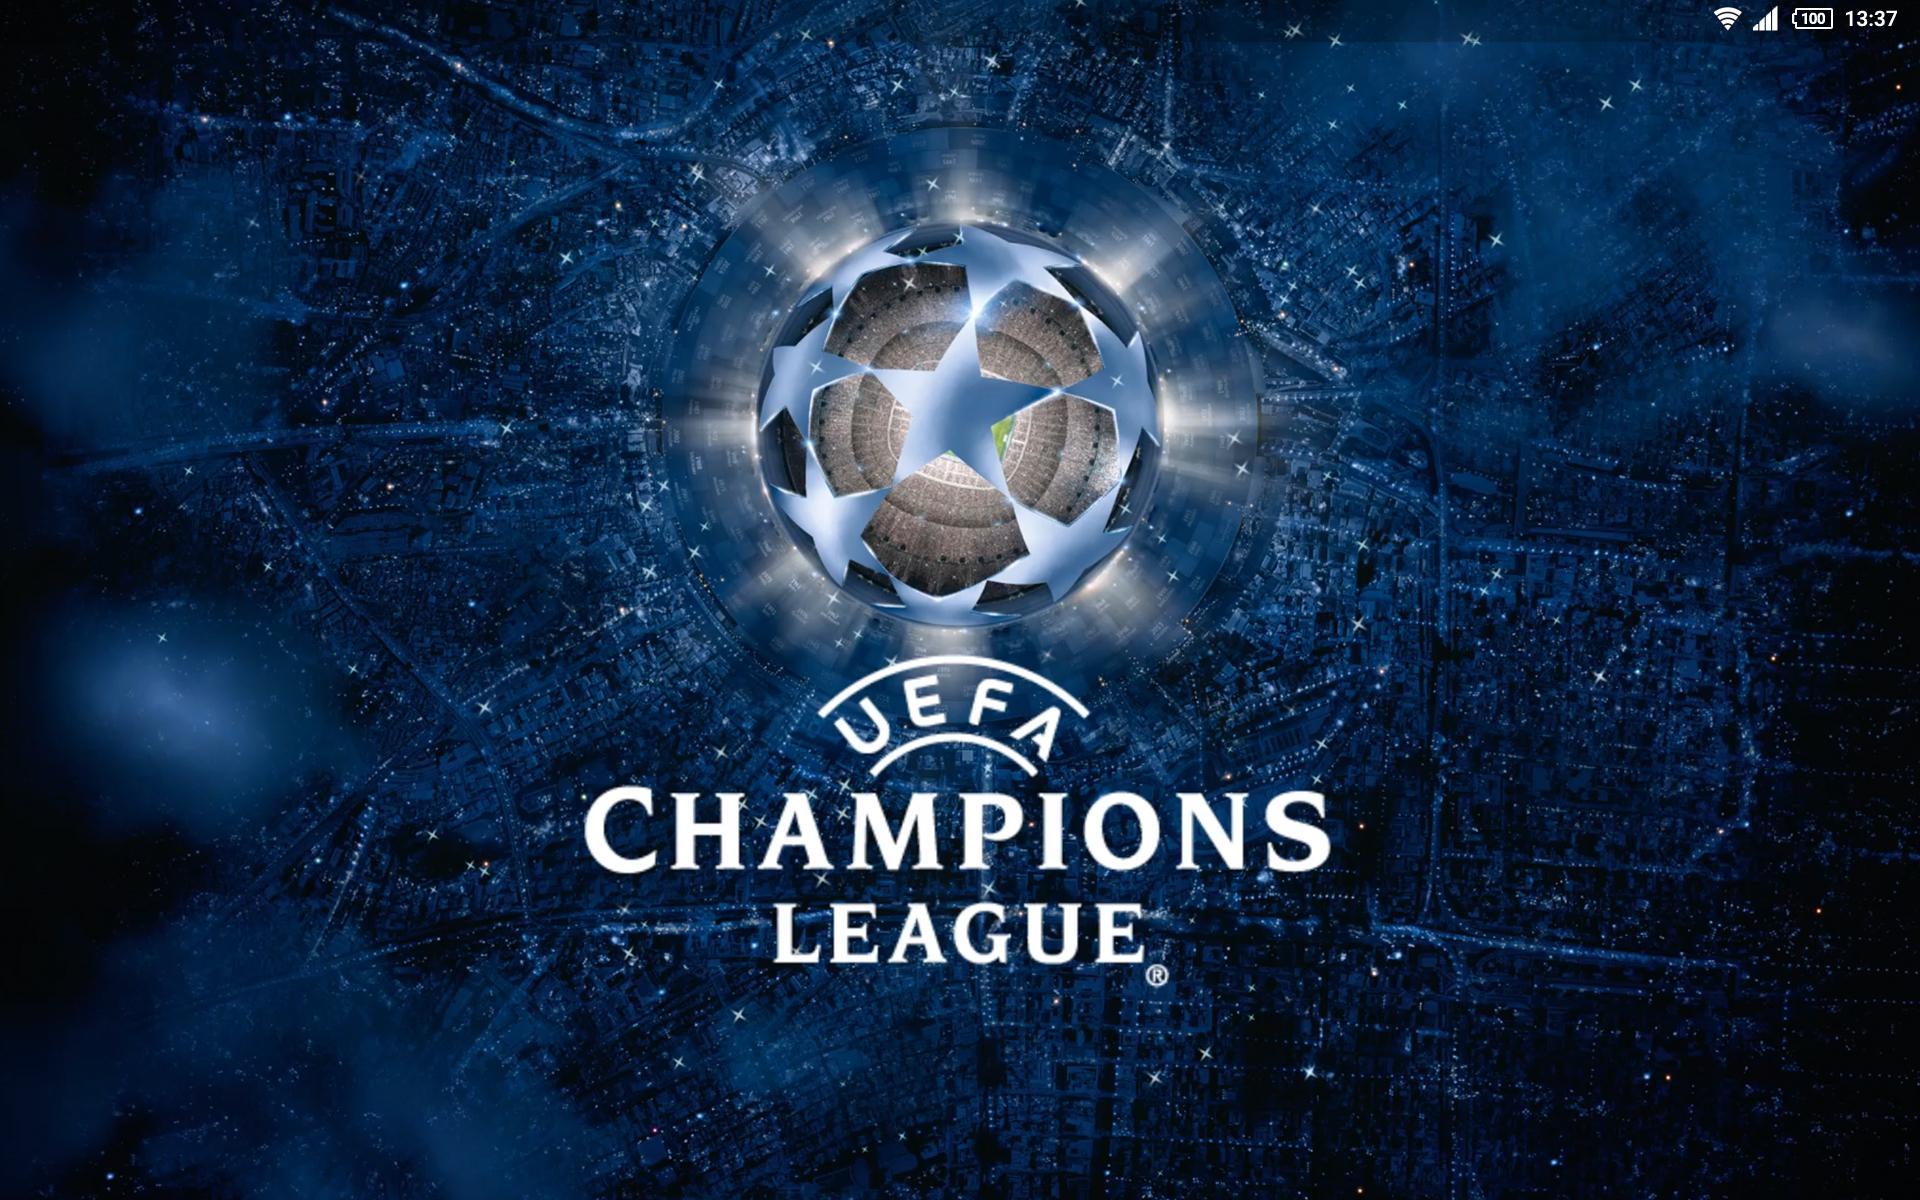 Champions League Logo Wallpapers - Wallpaper Cave